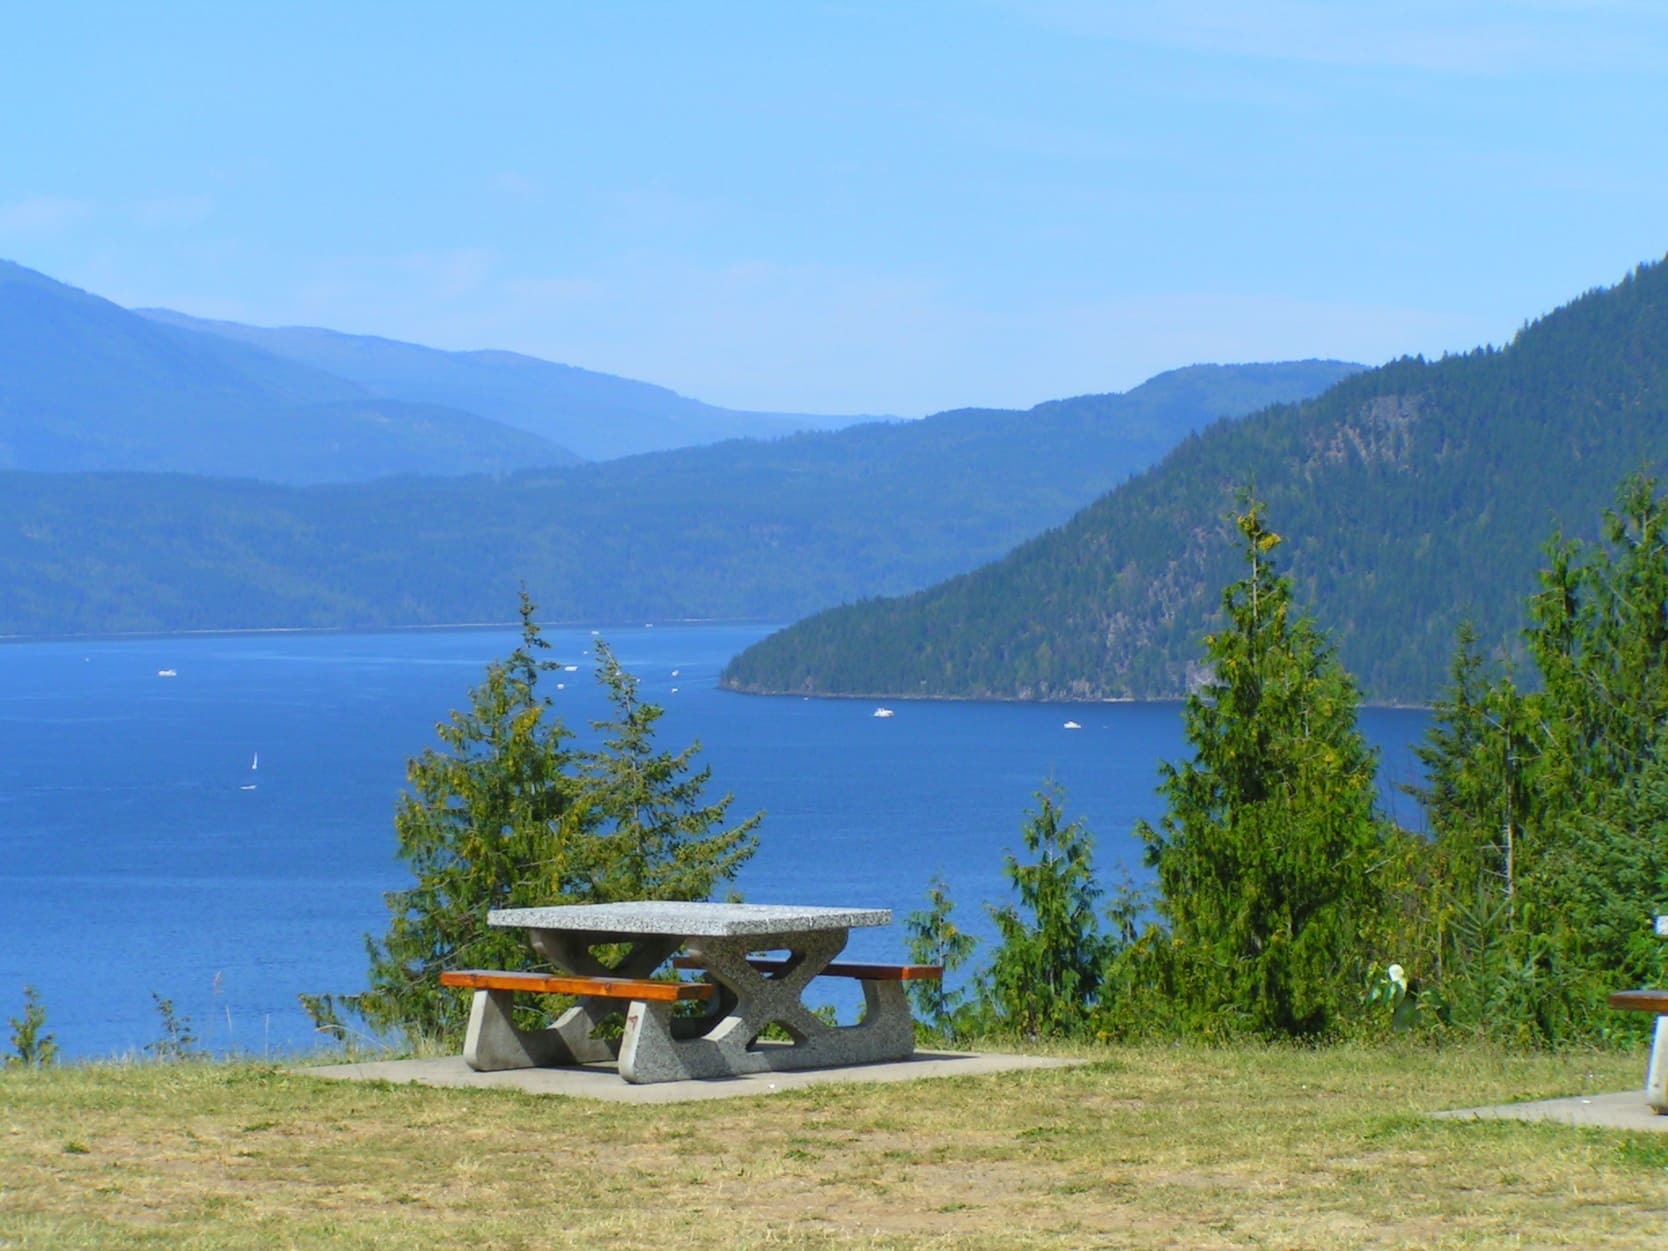 Picnic table overlooking Shuswap Lake in British Columbia